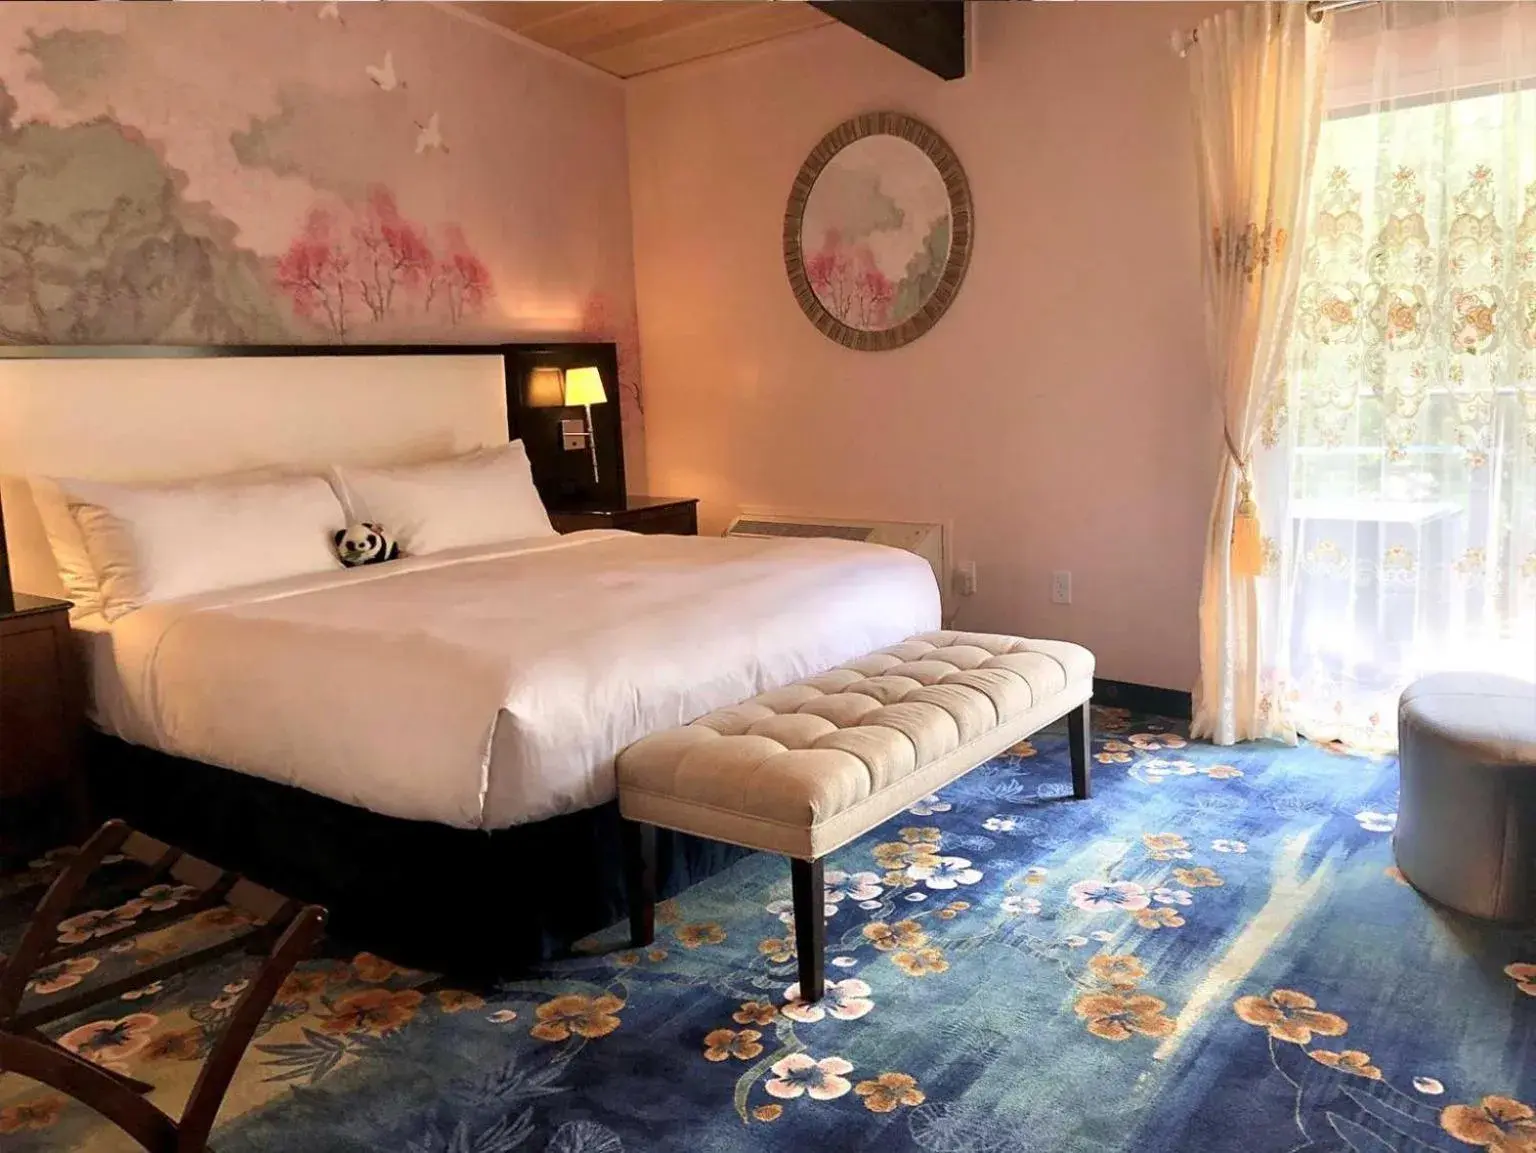 Bed in Wangshi China Palace